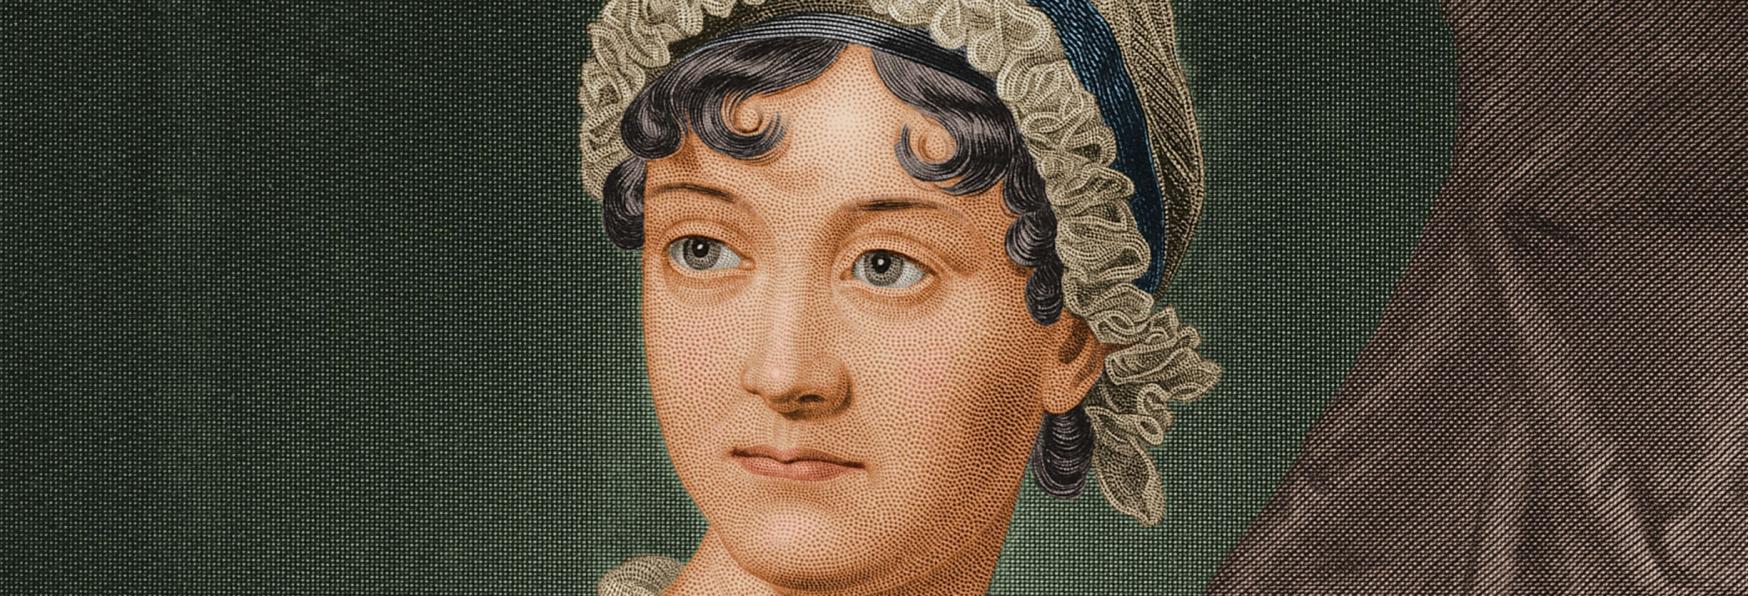 In arrivo su The CW una Serie TV Antologica sui Romanzi di Jane Austen